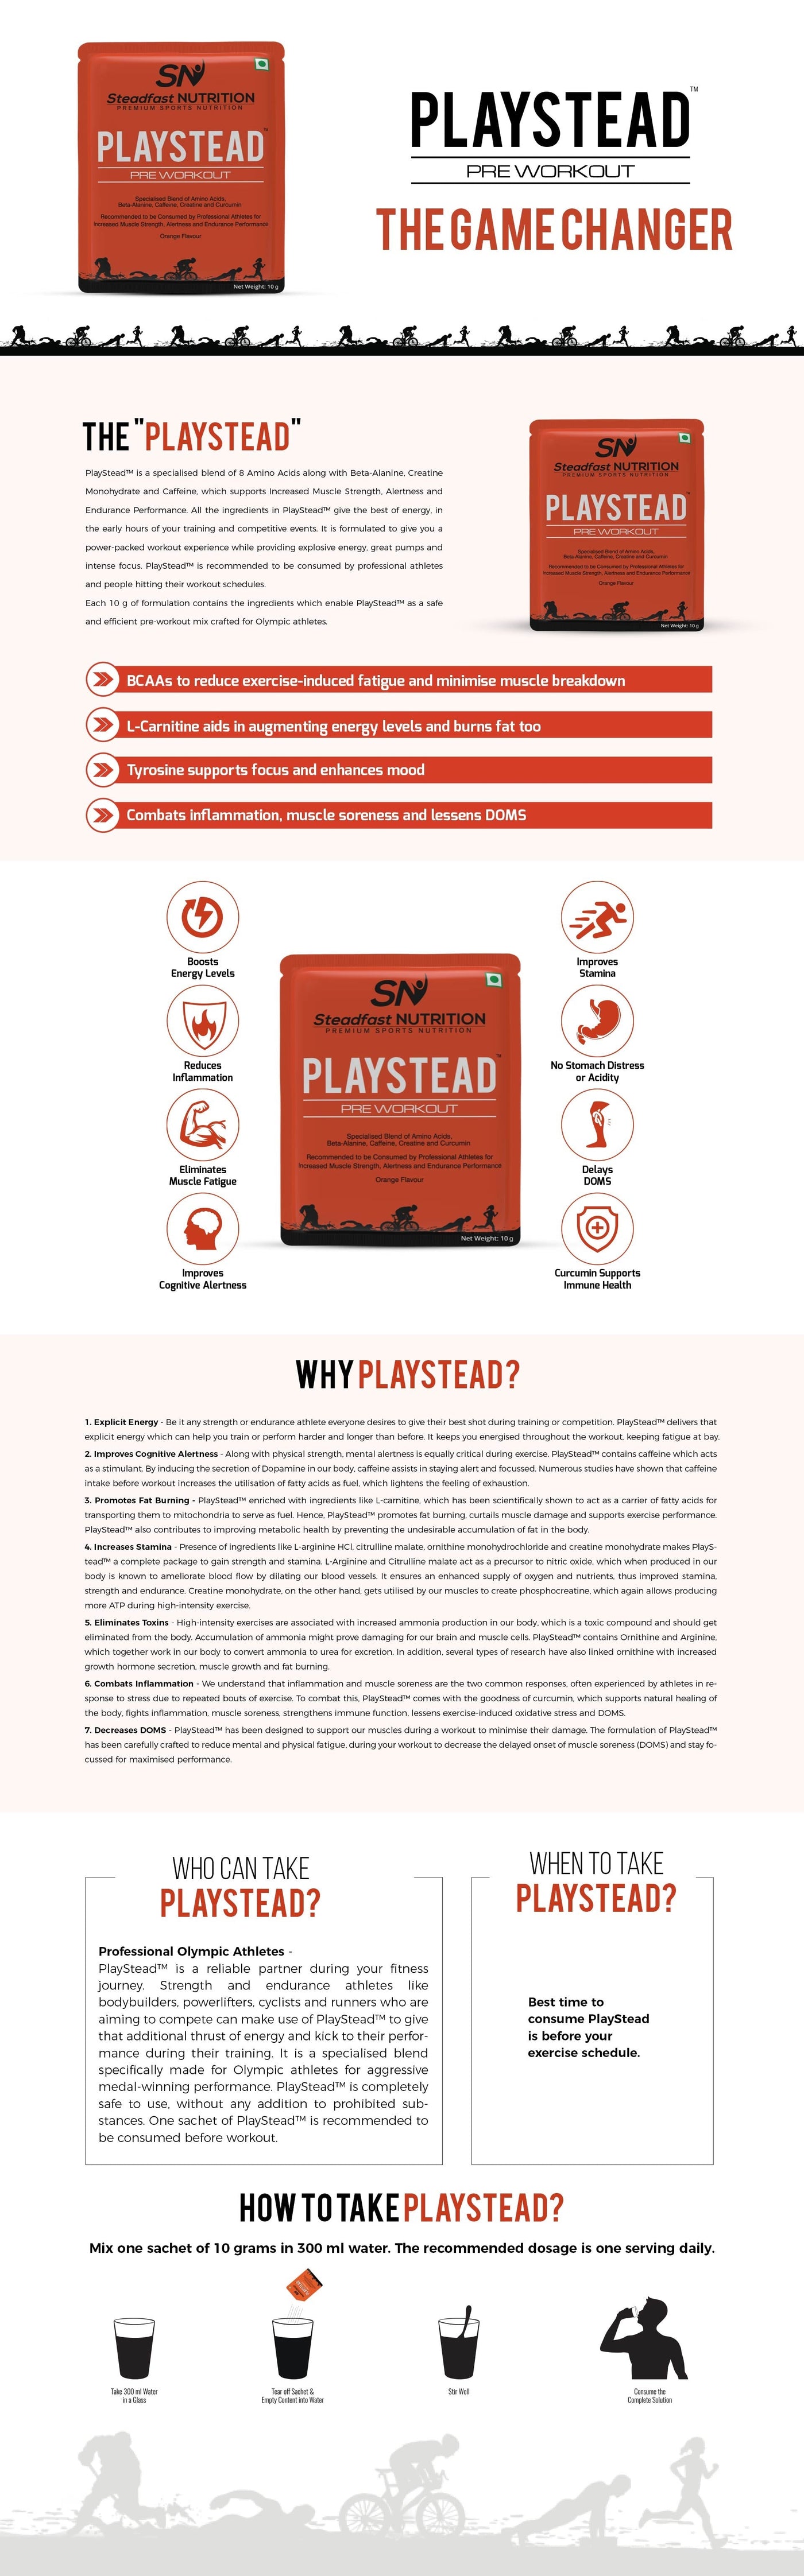 Steadfast Nutrition Playstead - Orange Flavour - Cyclop.in